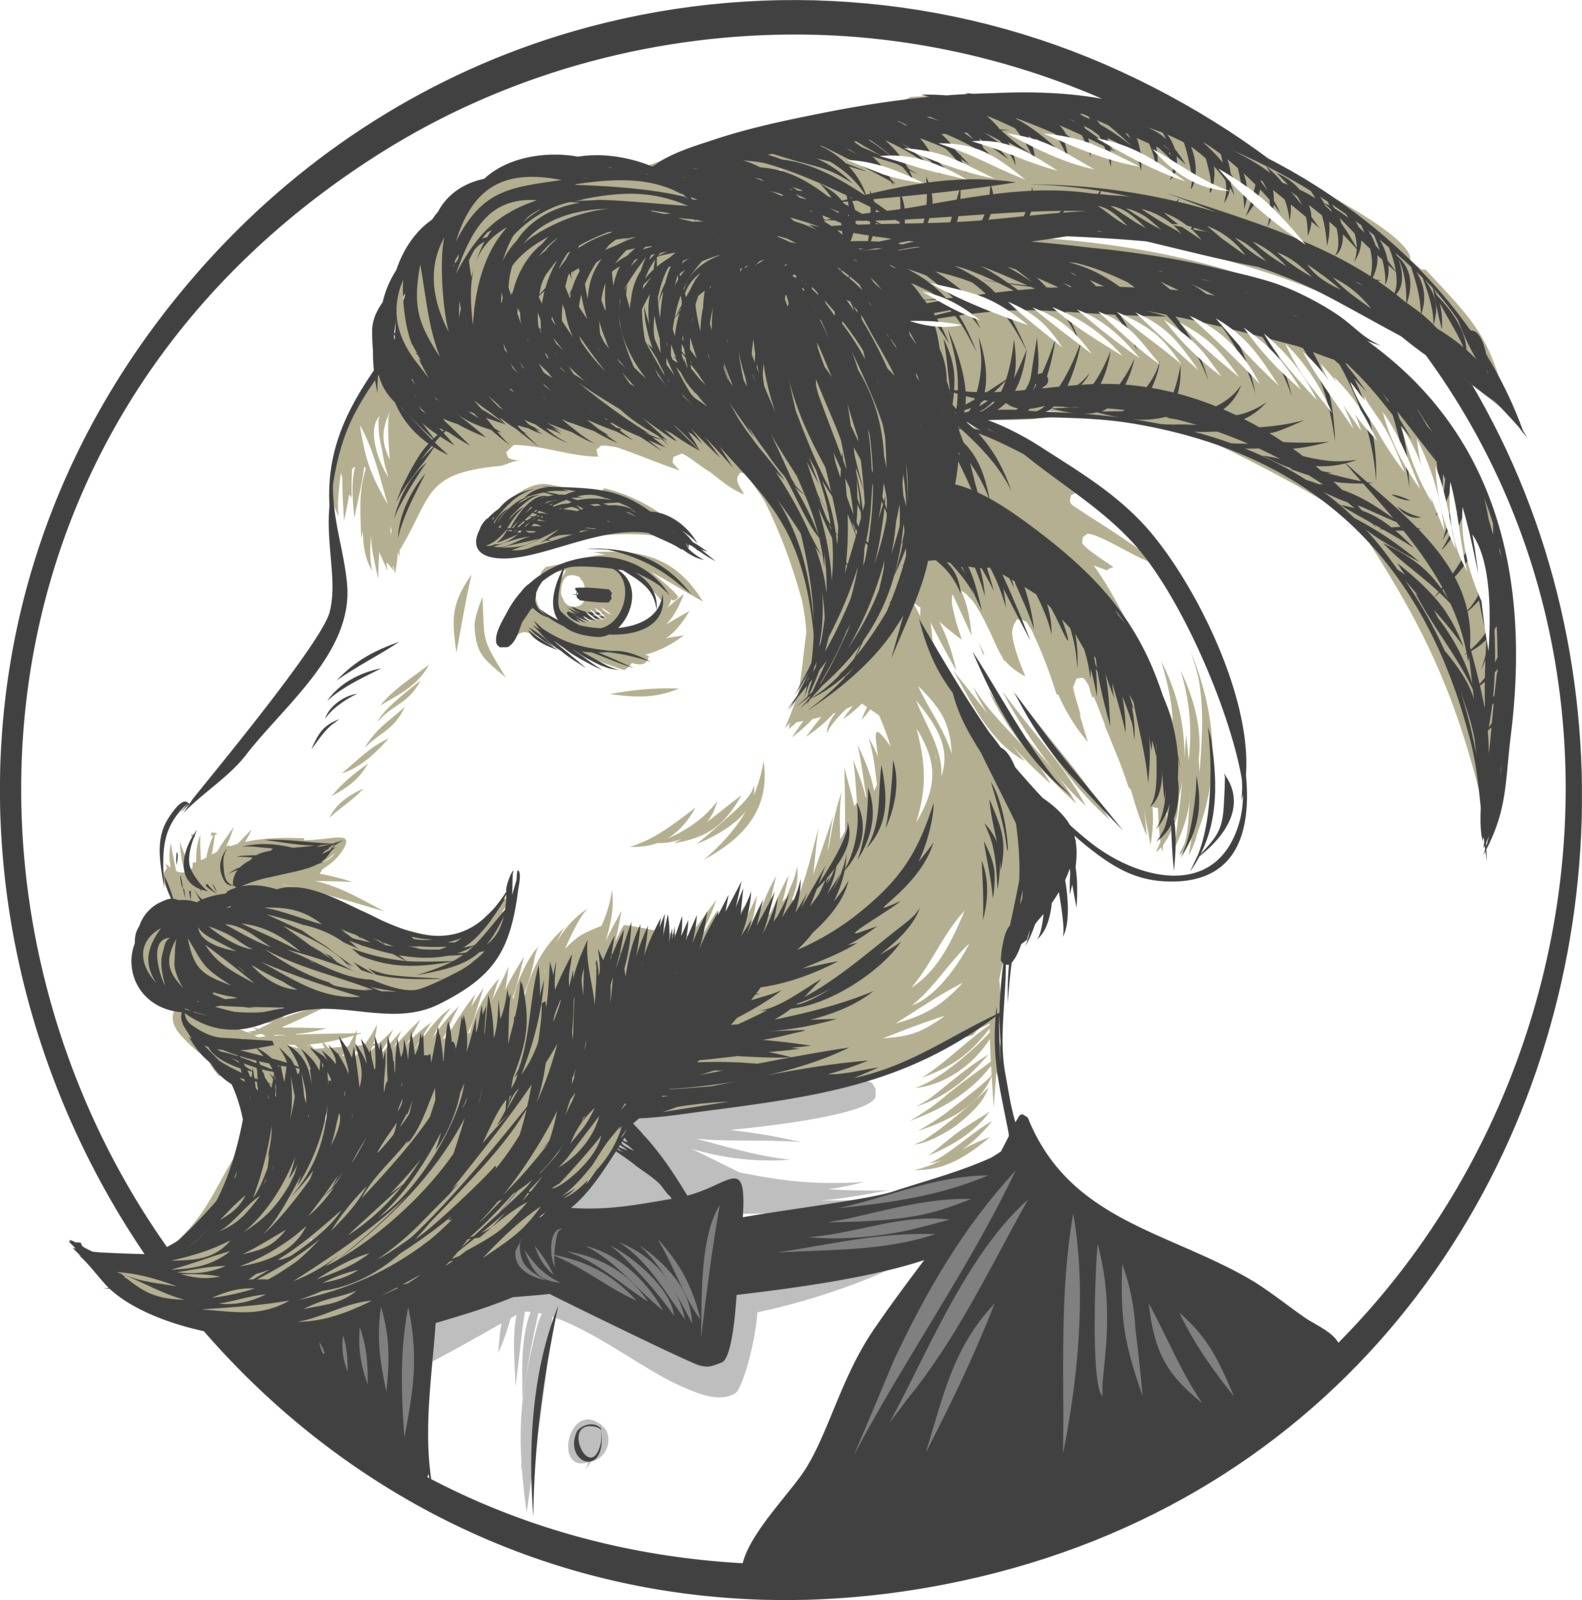 Goat Beard Tie Tuxedo Circle Drawing by patrimonio